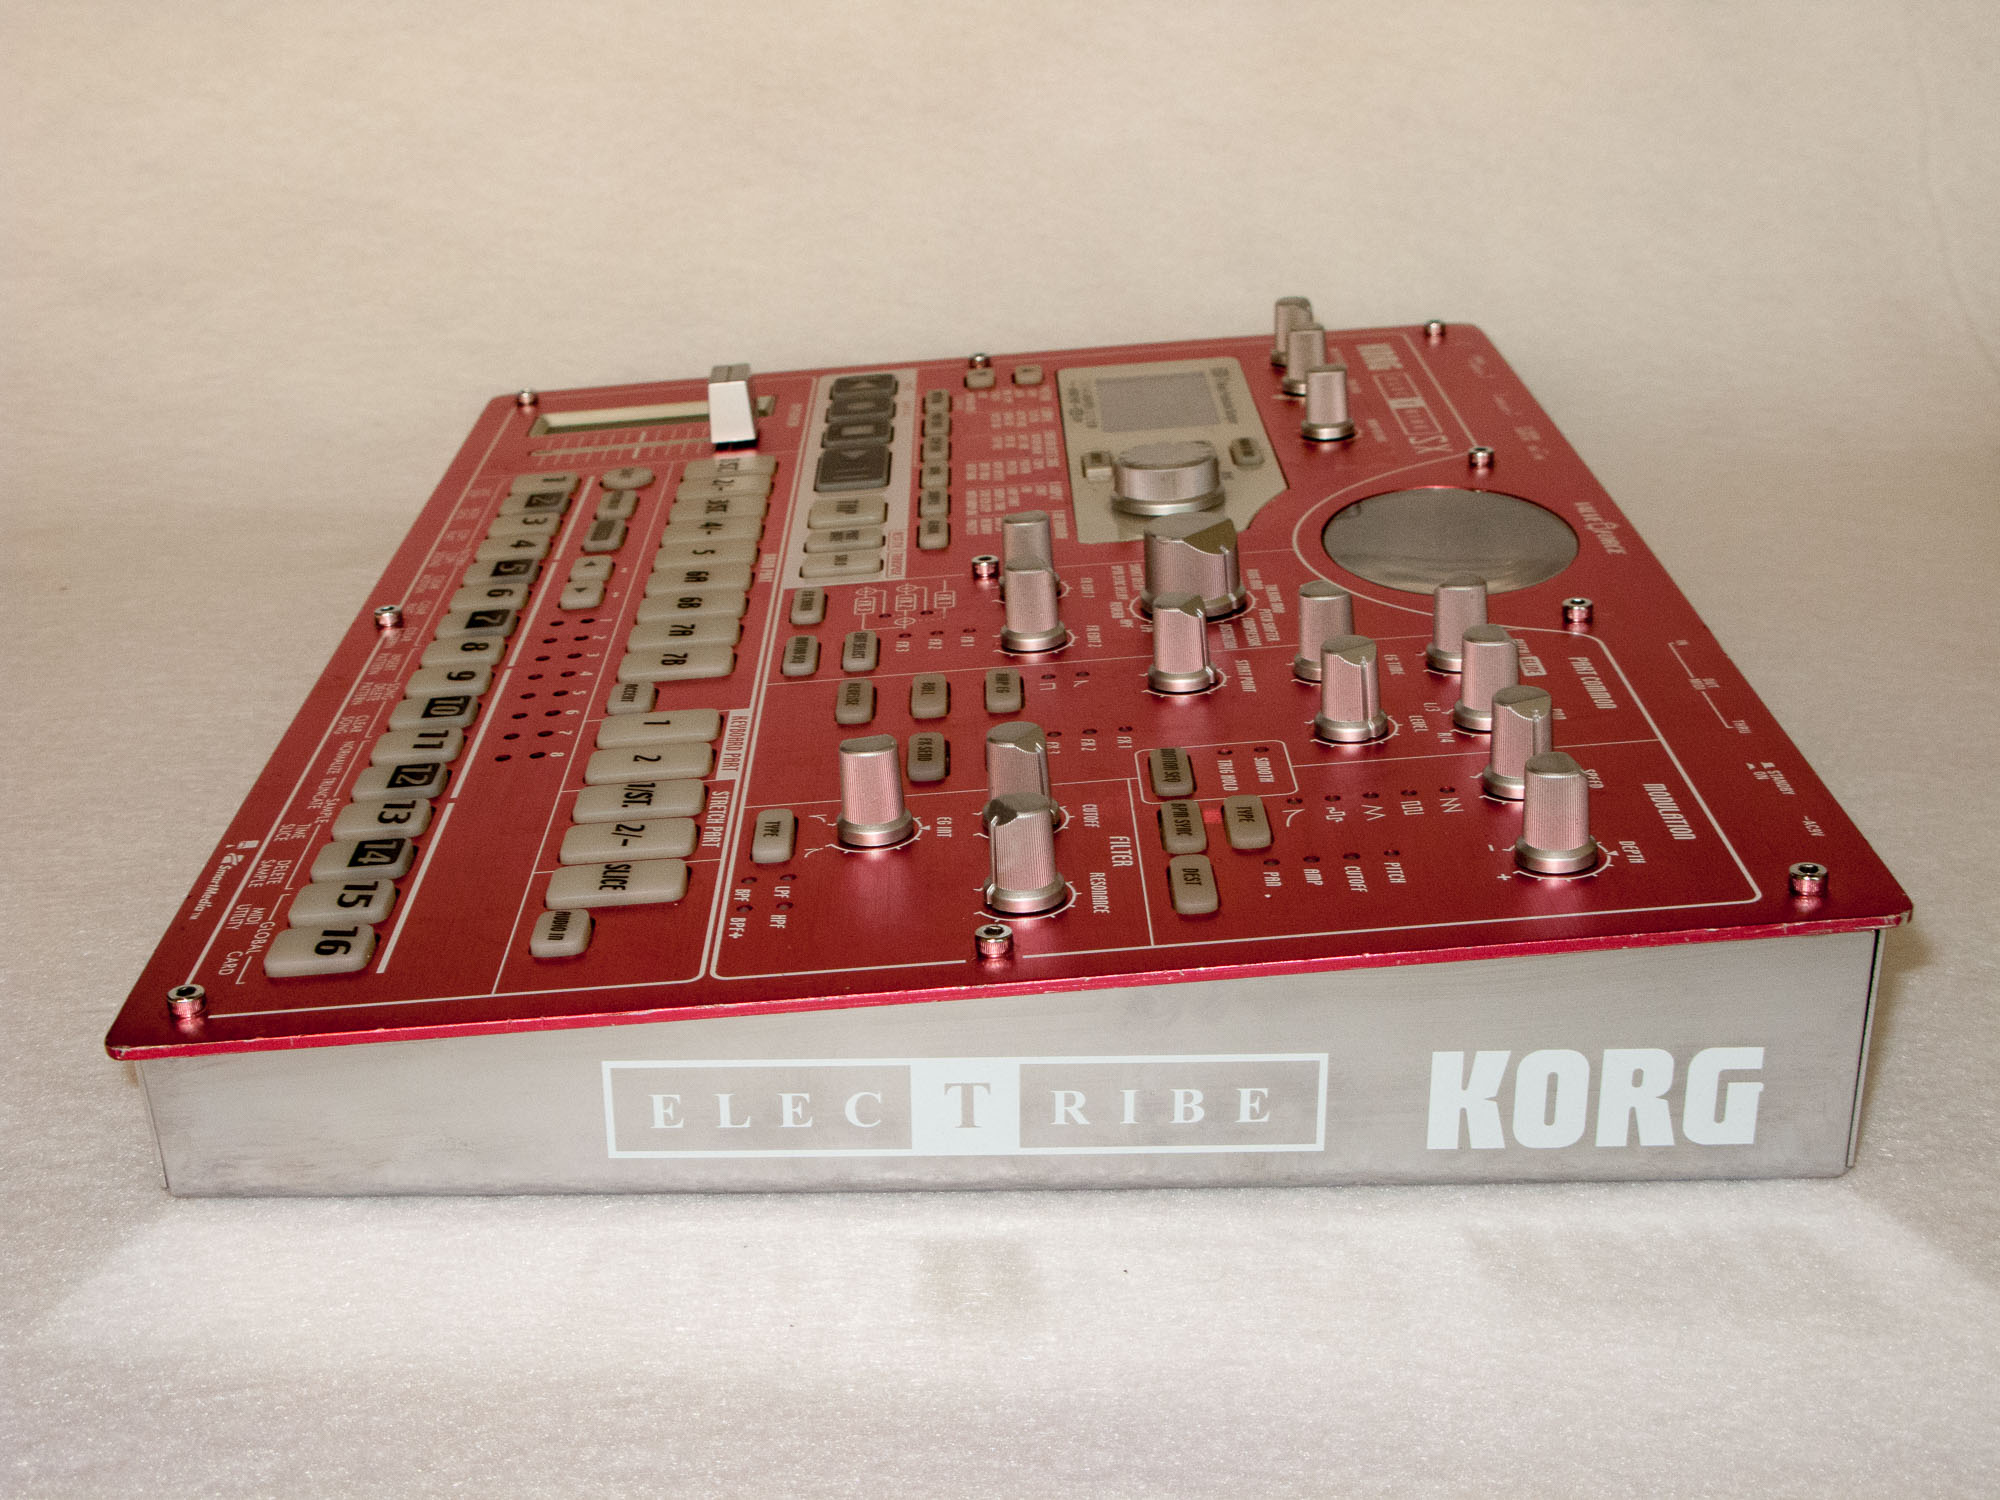 Korg Esx1 Electribe SX Drum Machine Sampler w/ Custom Tube Cover